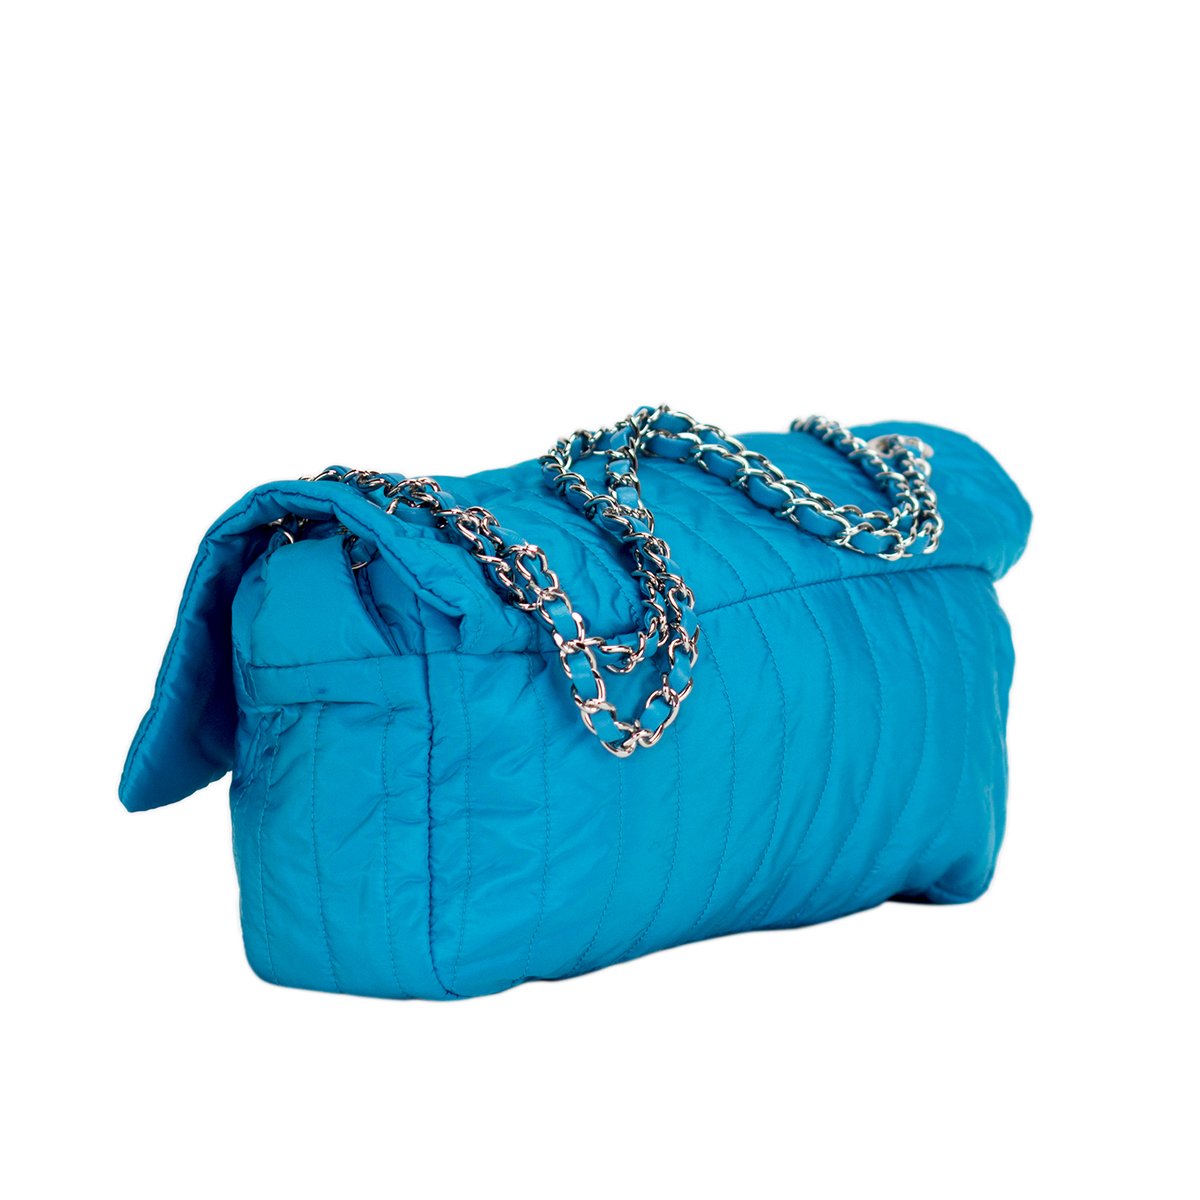 Chanel Microfiber Turquoise Classic Flap Bag